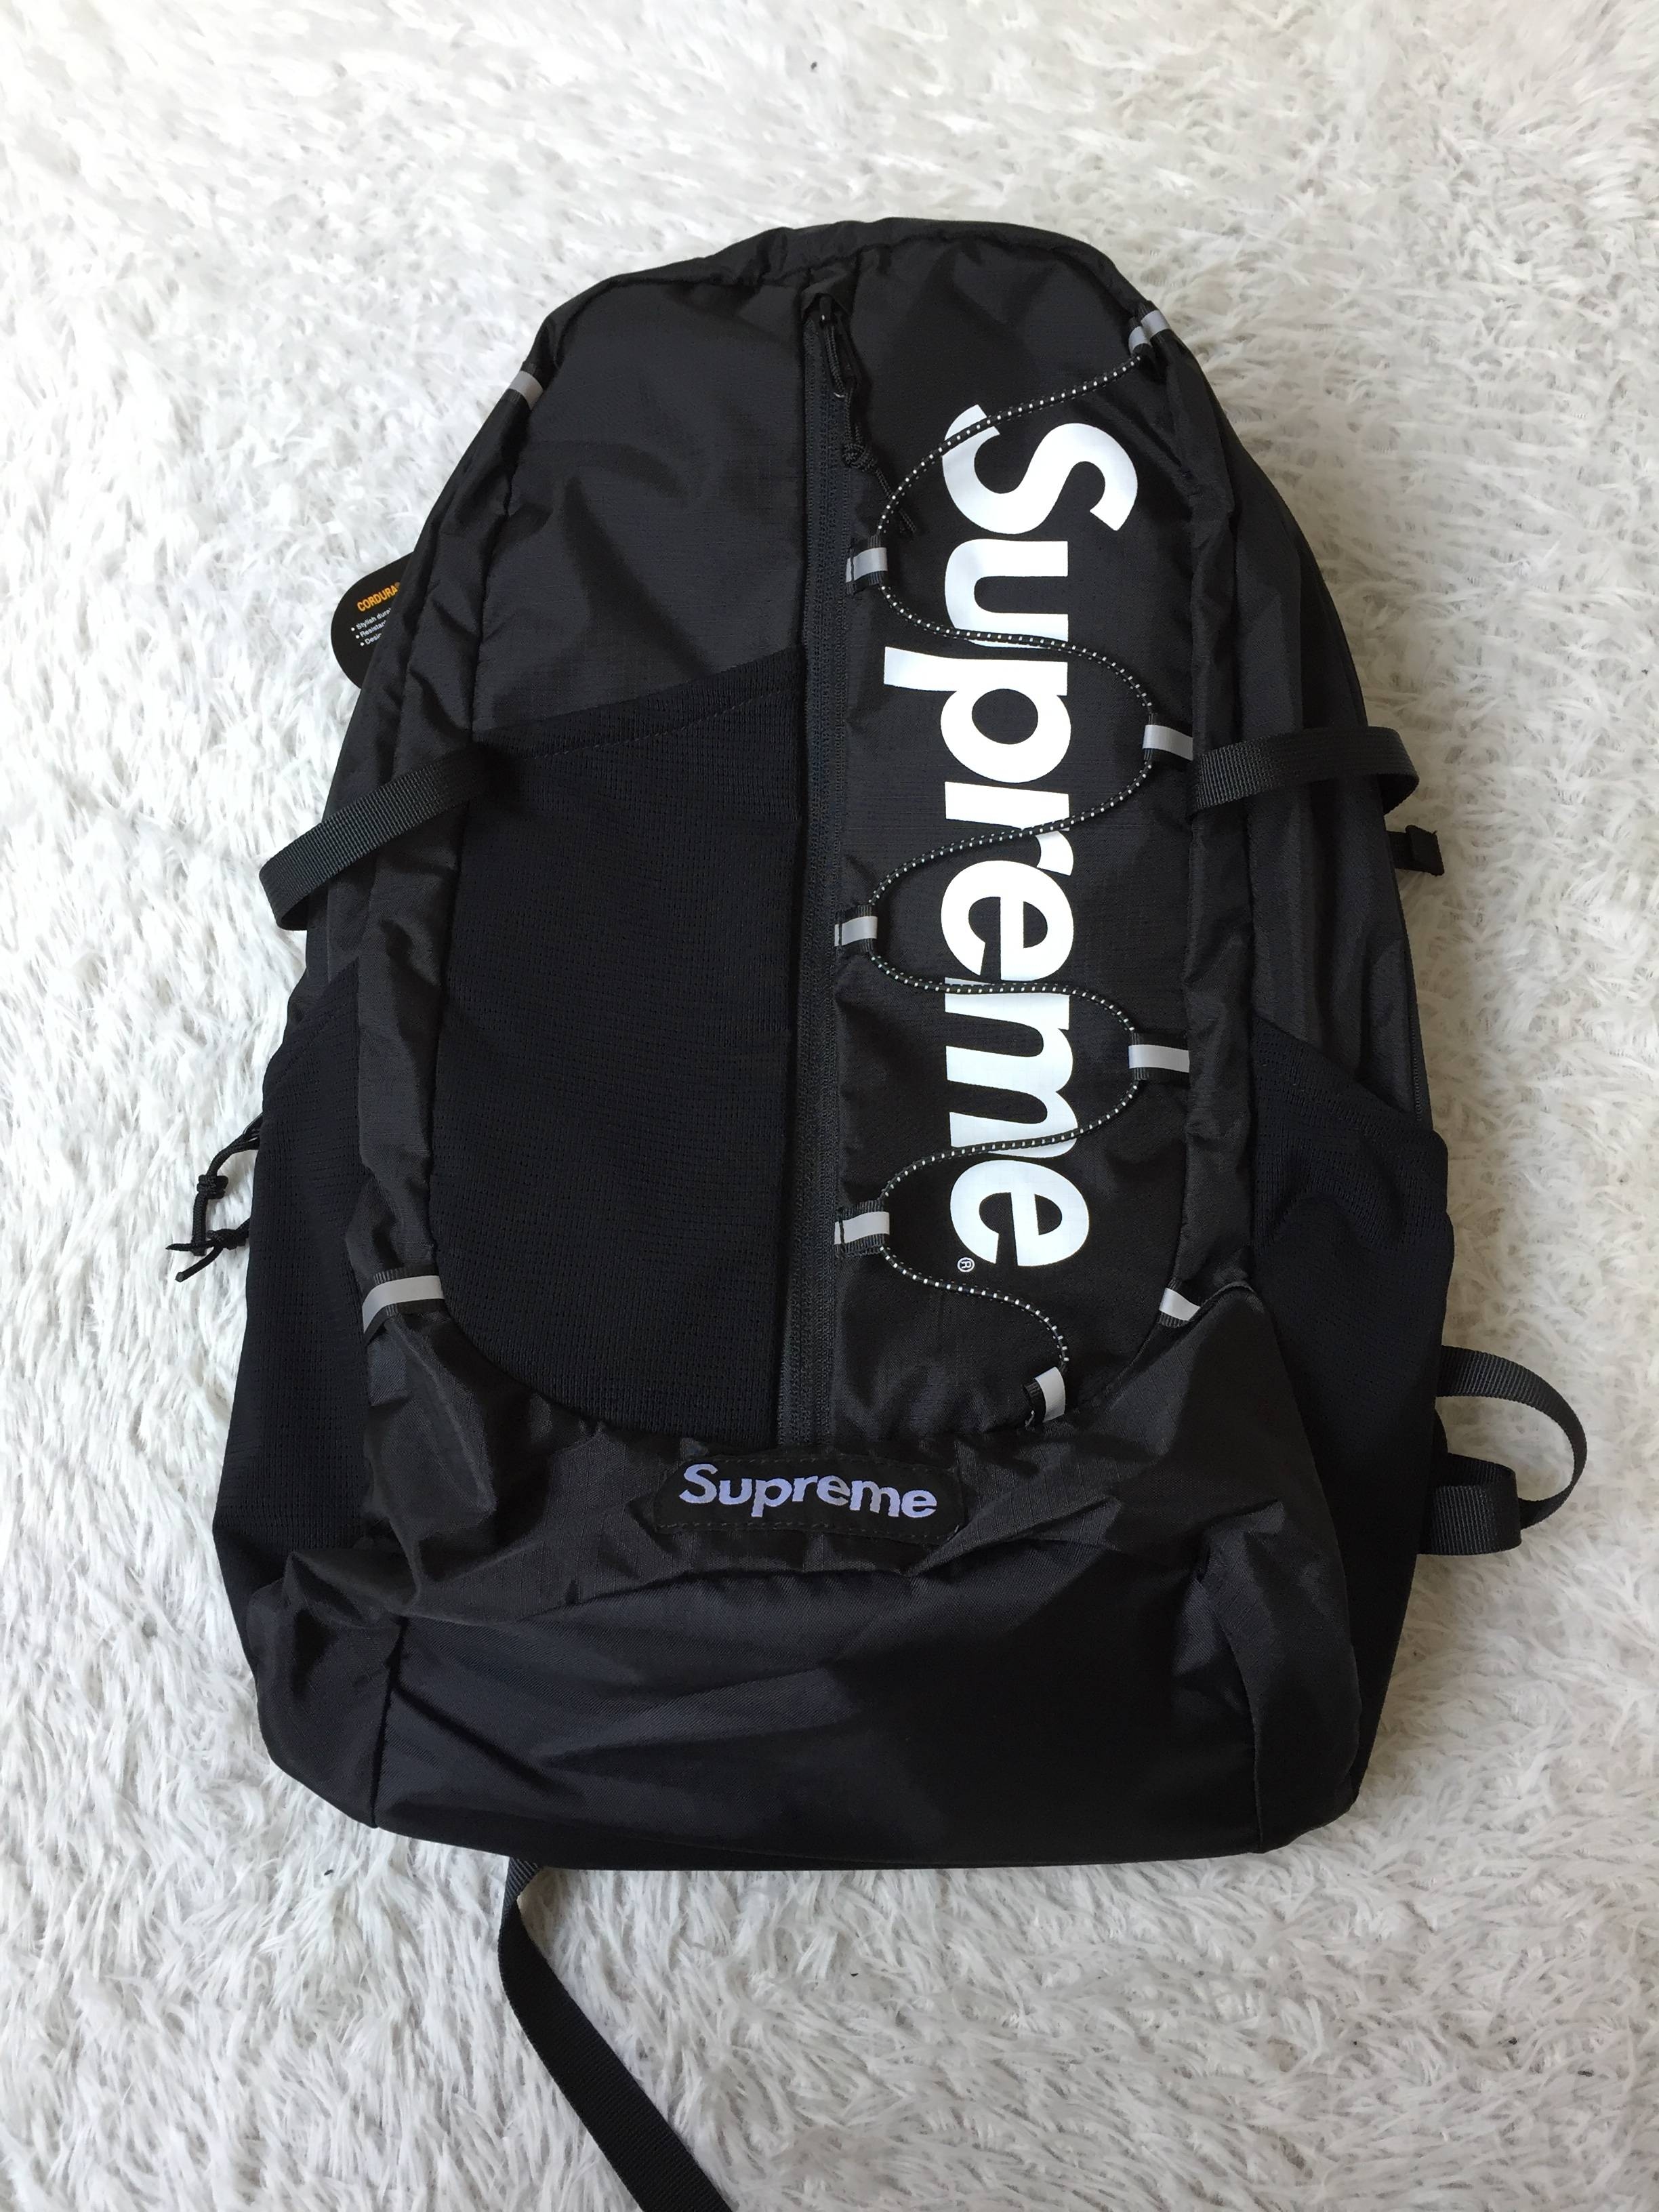 Supreme Backpack Ss19 Real Vs Fake